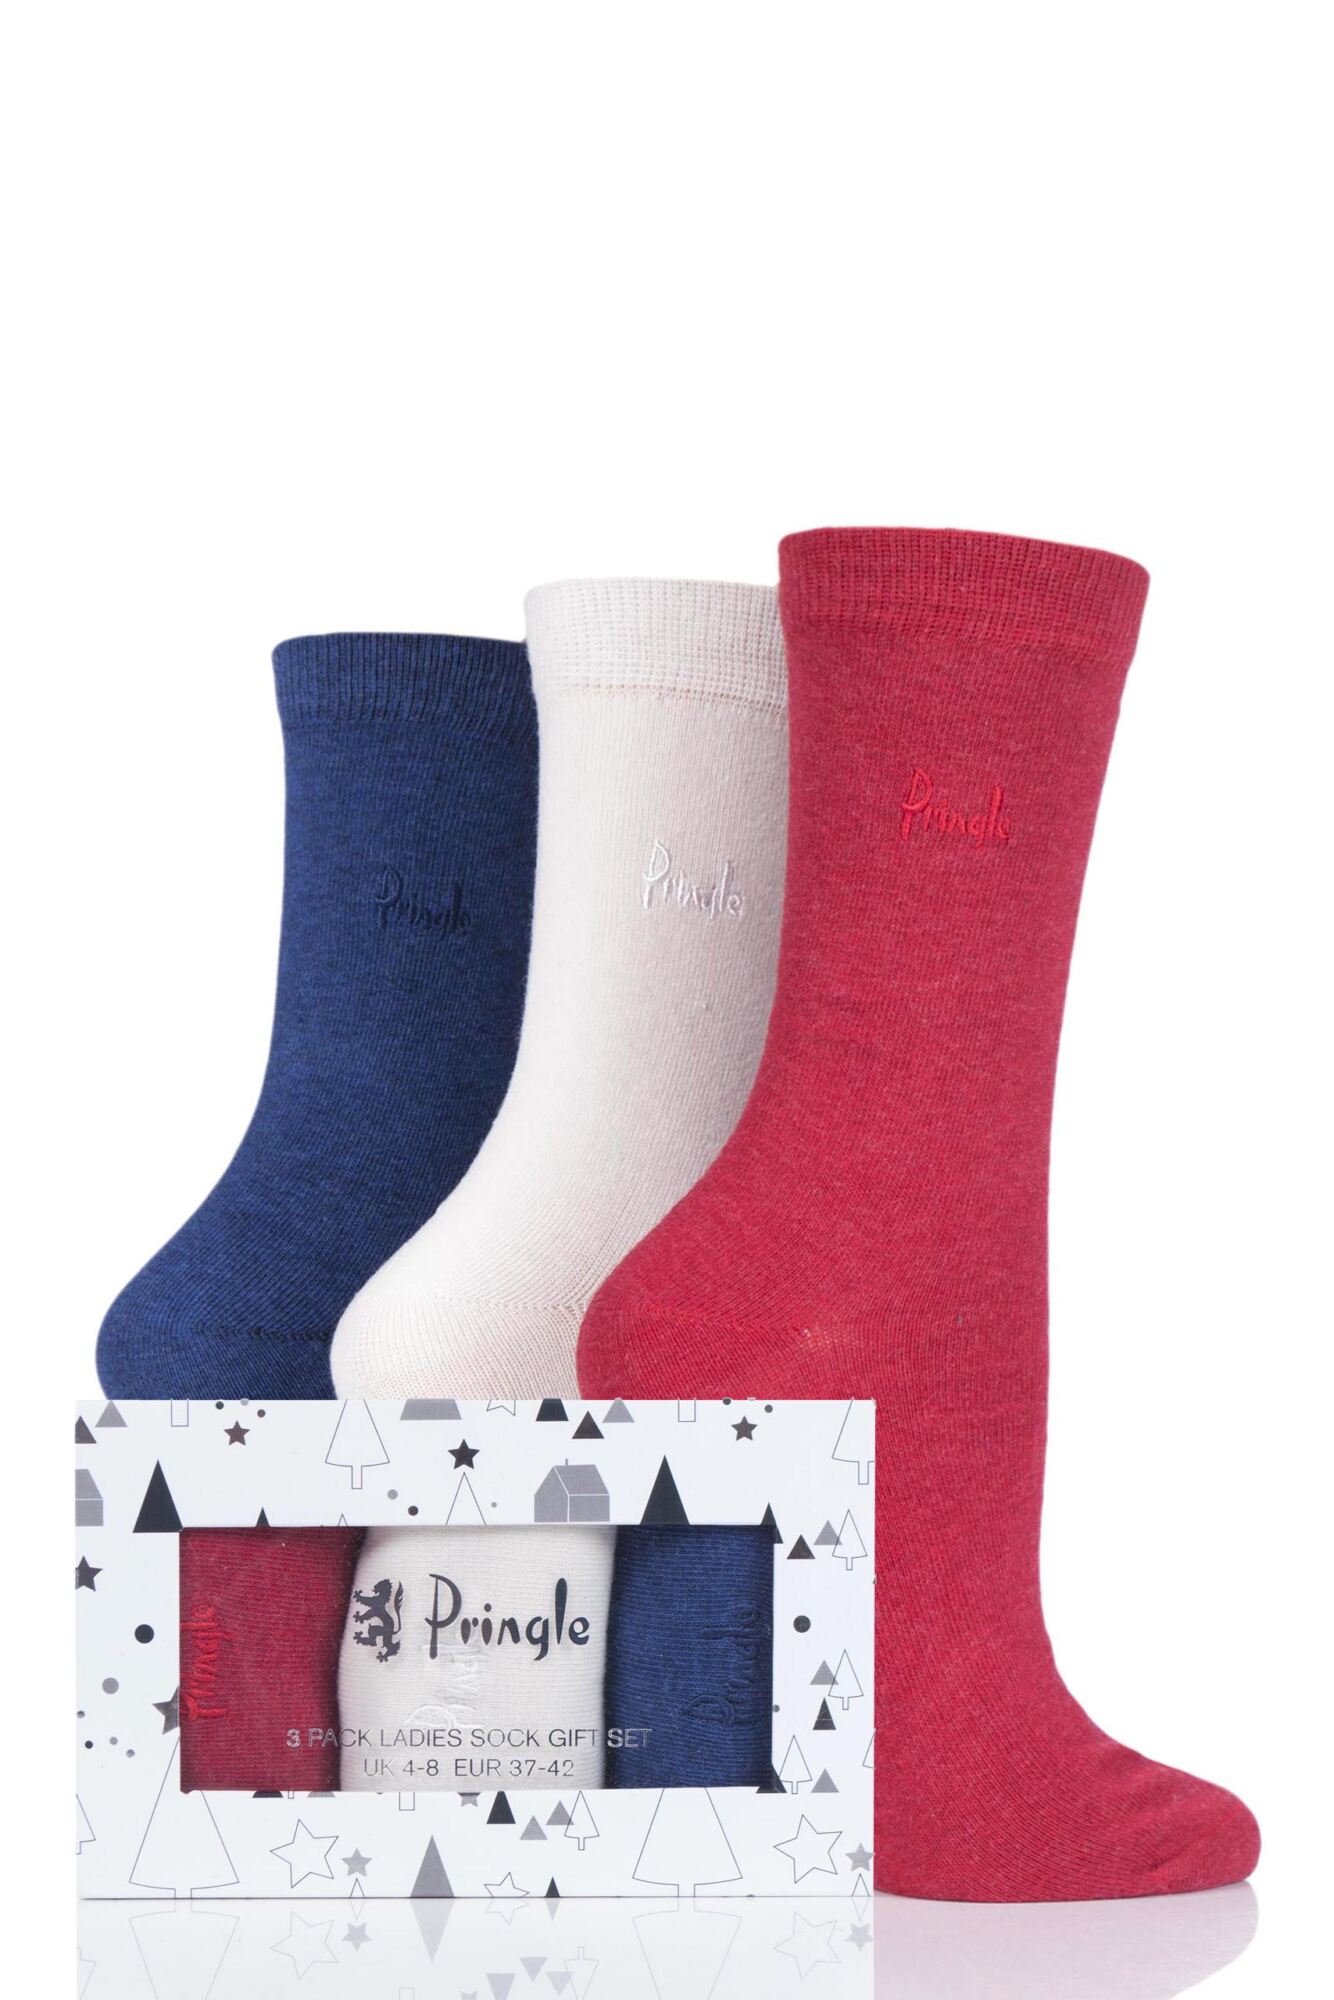 3 Pair Tiffany Gift Boxed Cotton Socks Ladies - Pringle